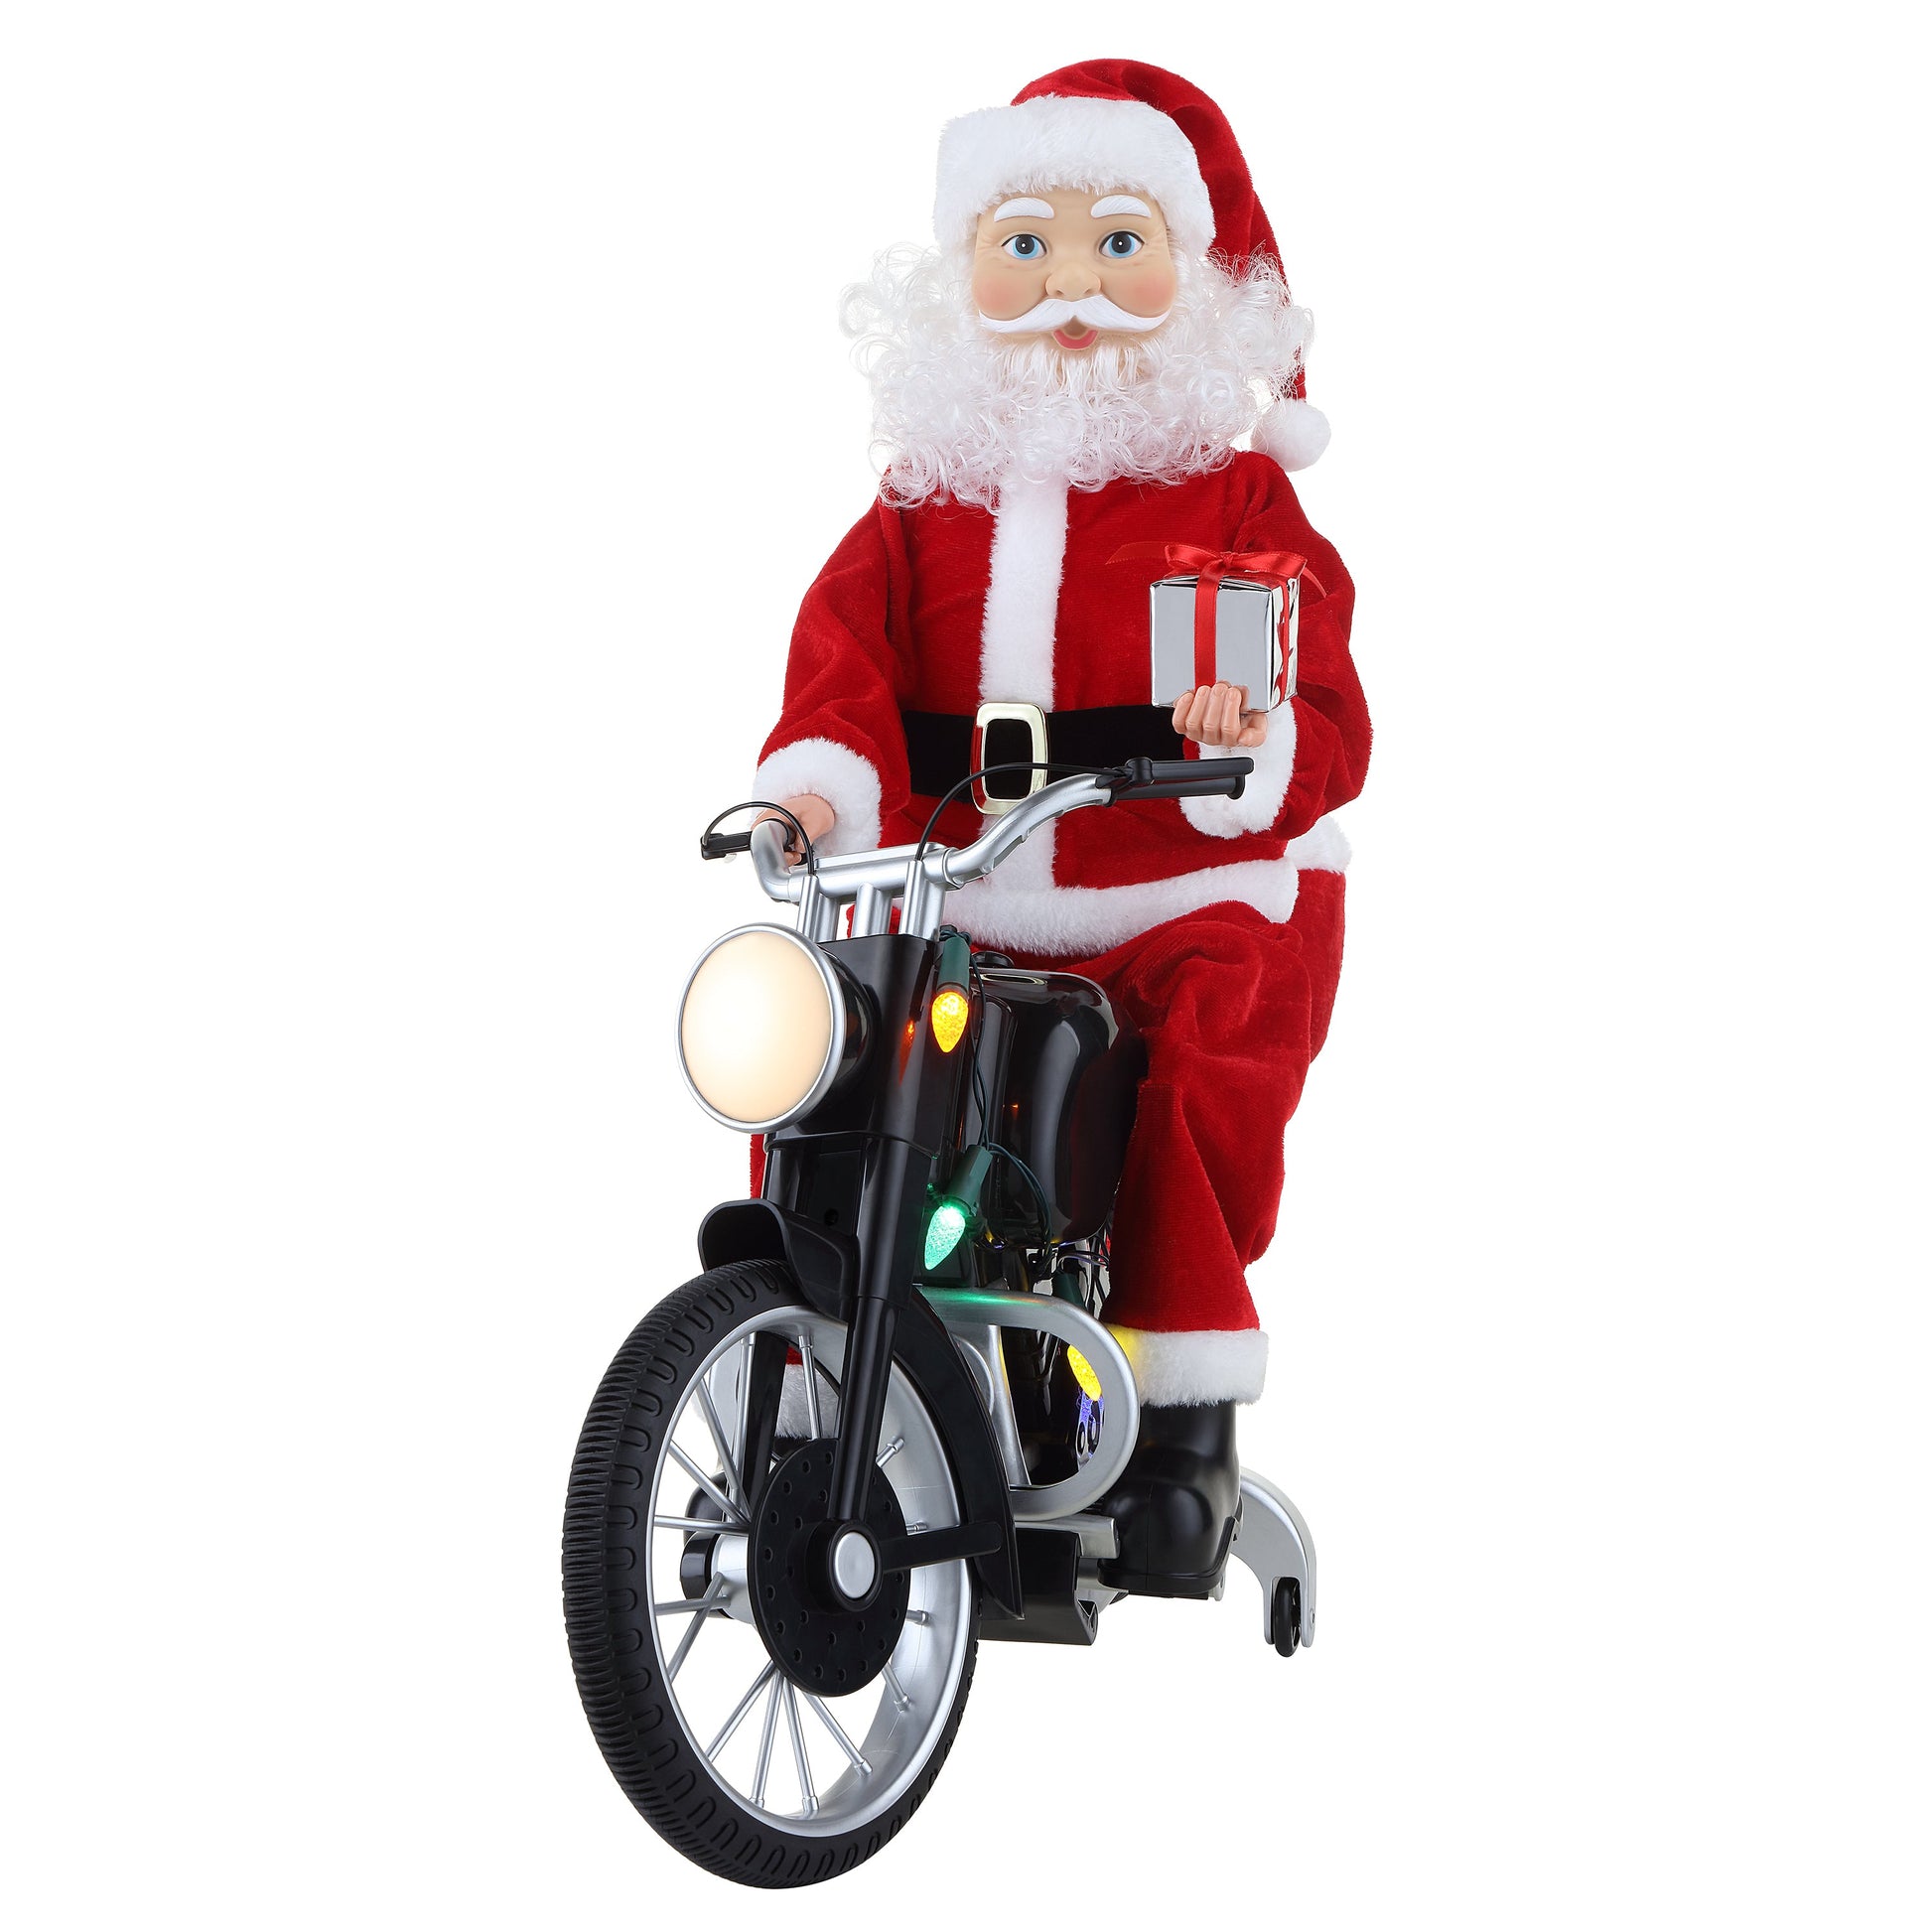 20" Animated Motorcycling Santa - White